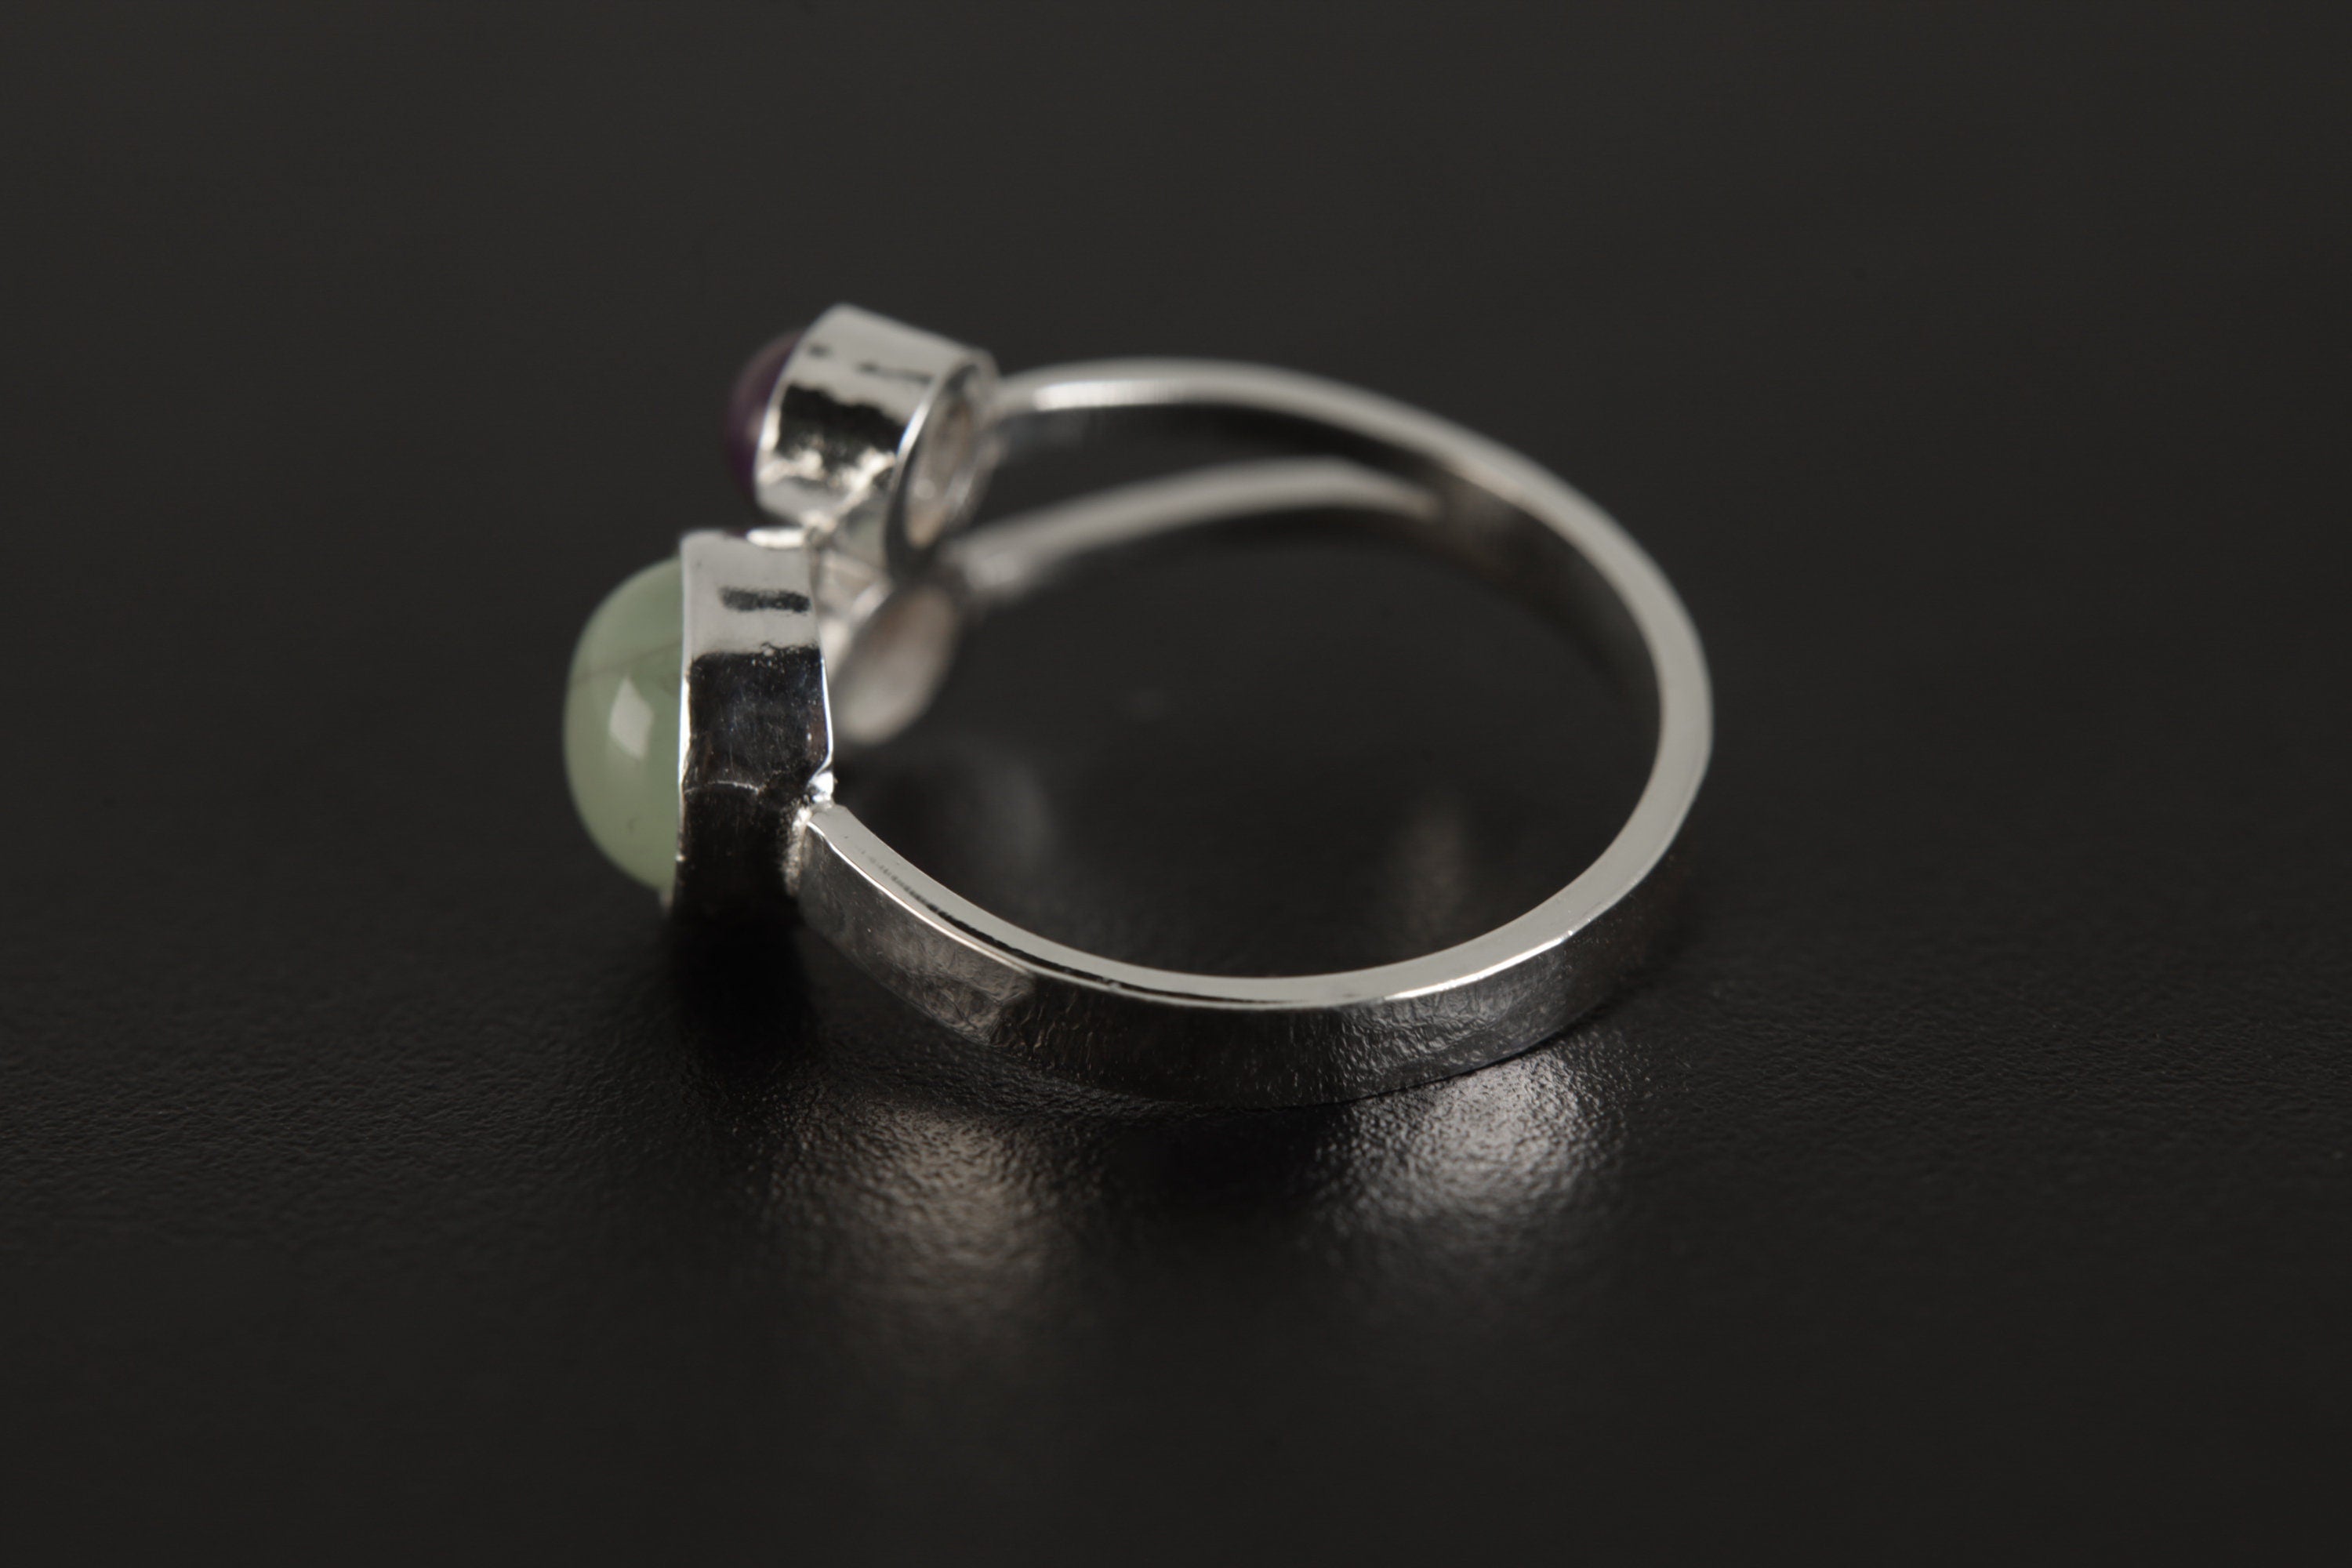 Amethyst & Aquamarine Harmony - Ring Adjustable - Sterling Silver Ring - Unisex - Size 5-12 US